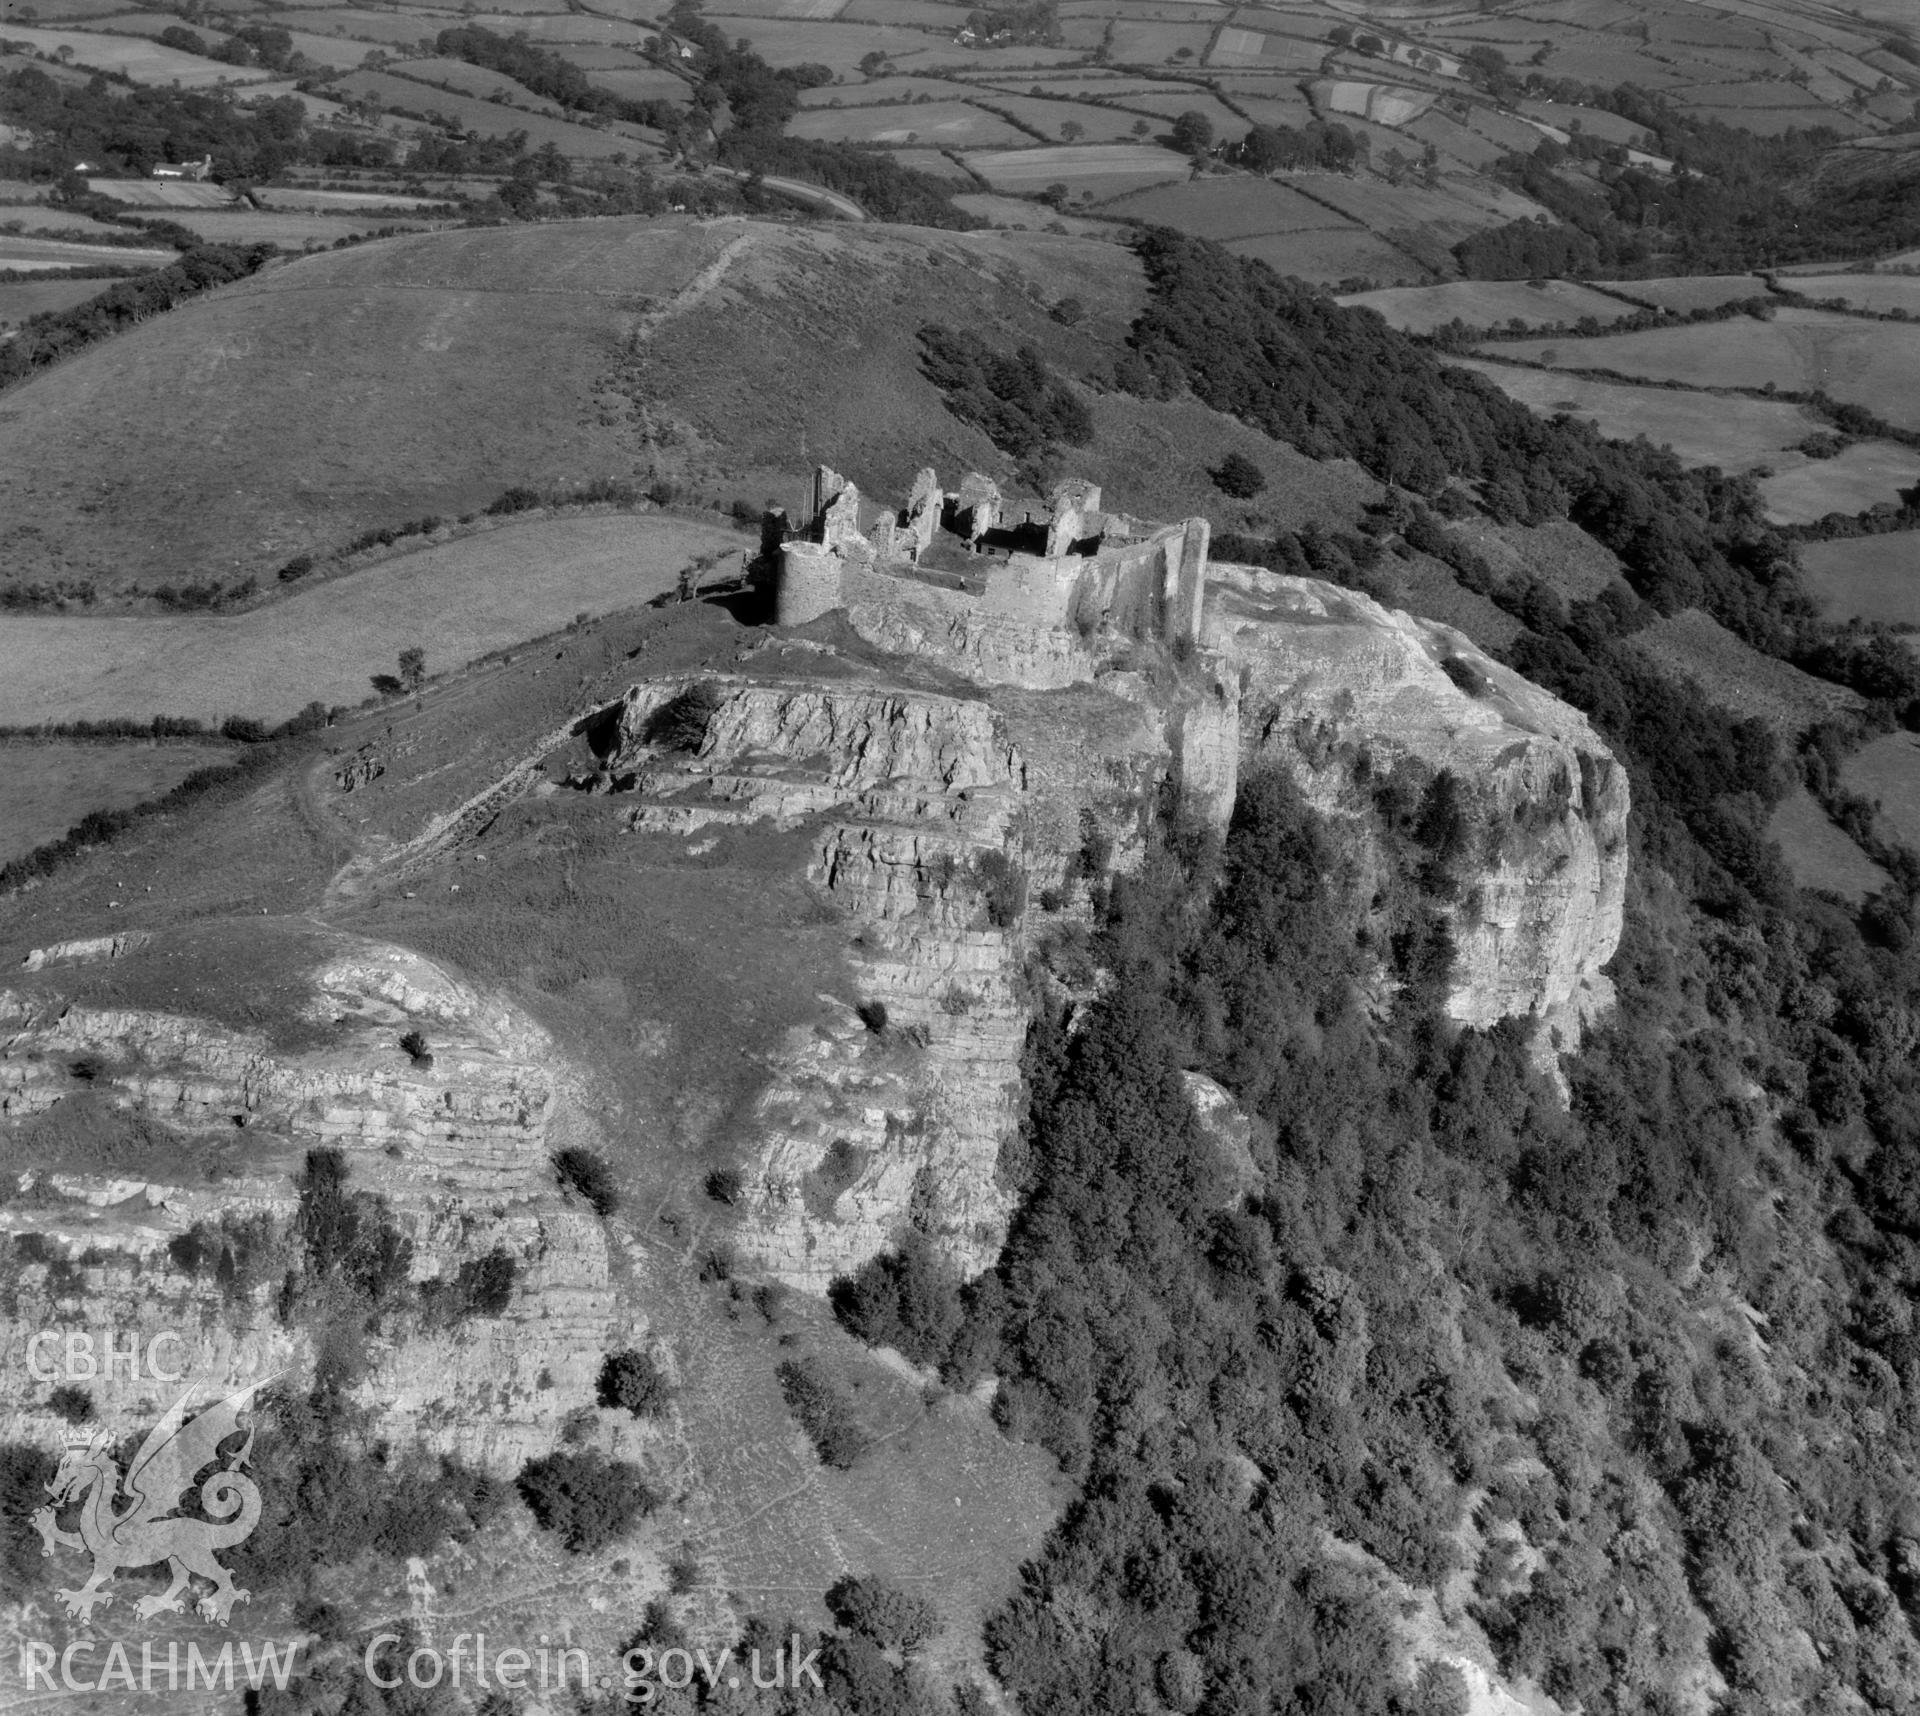 View of Carreg Cennen castle